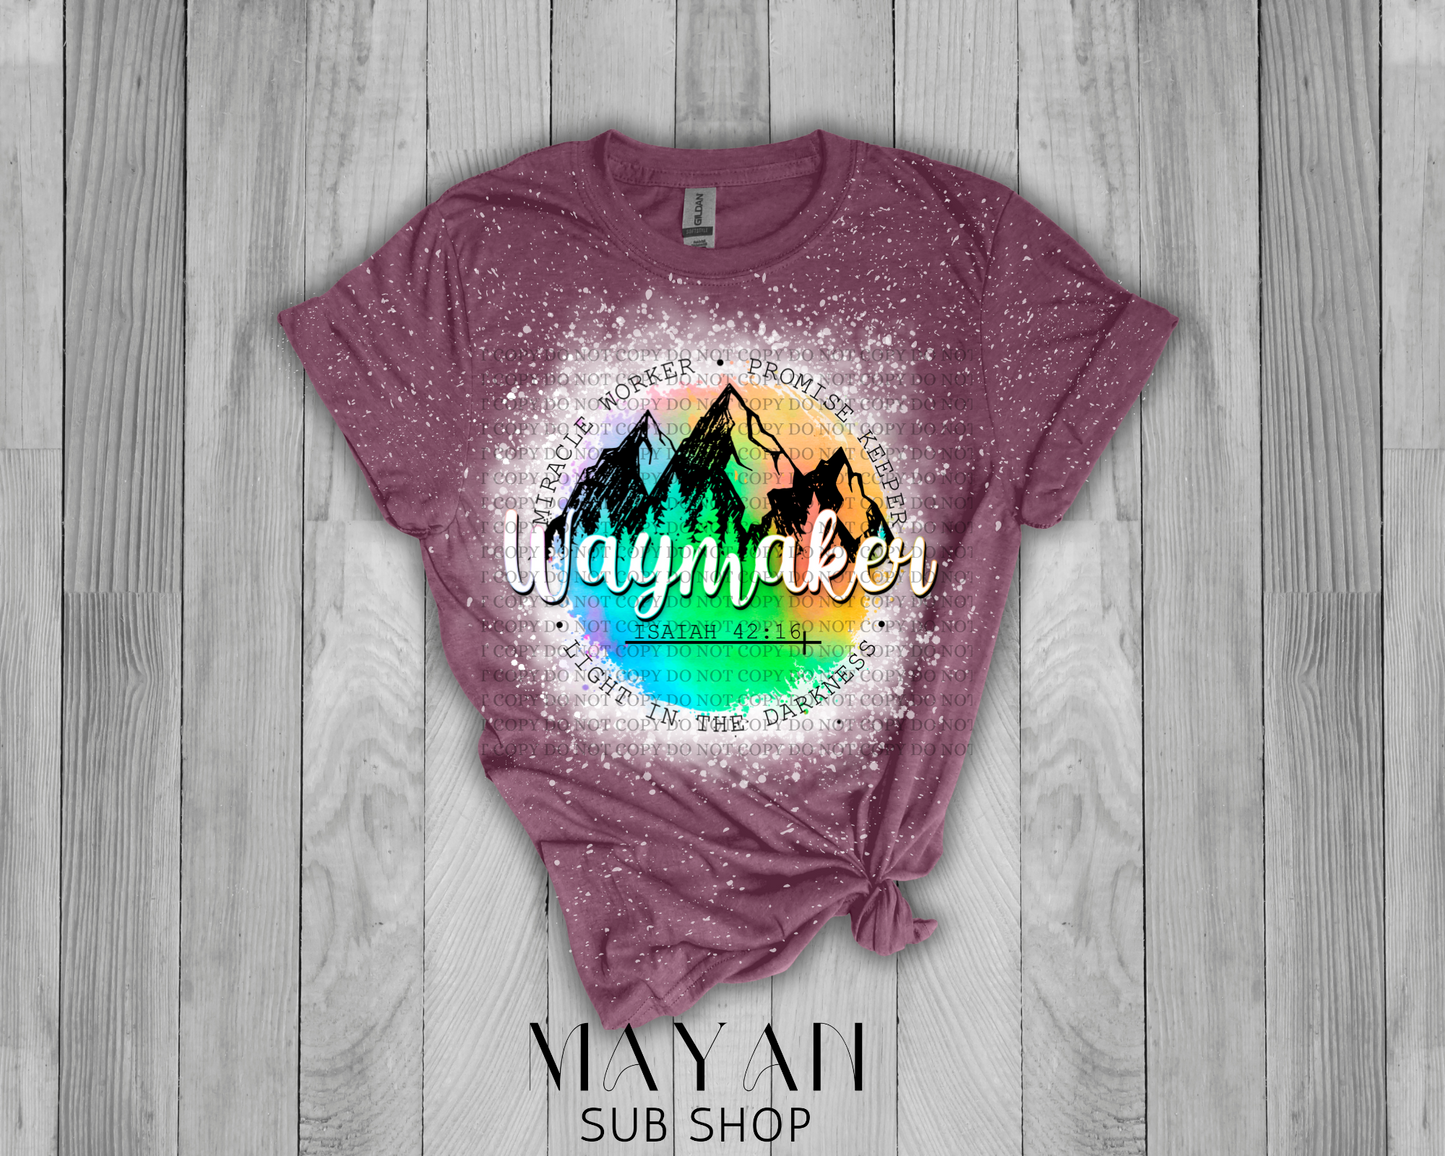 Way Maker Bleached Shirt - Mayan Sub Shop